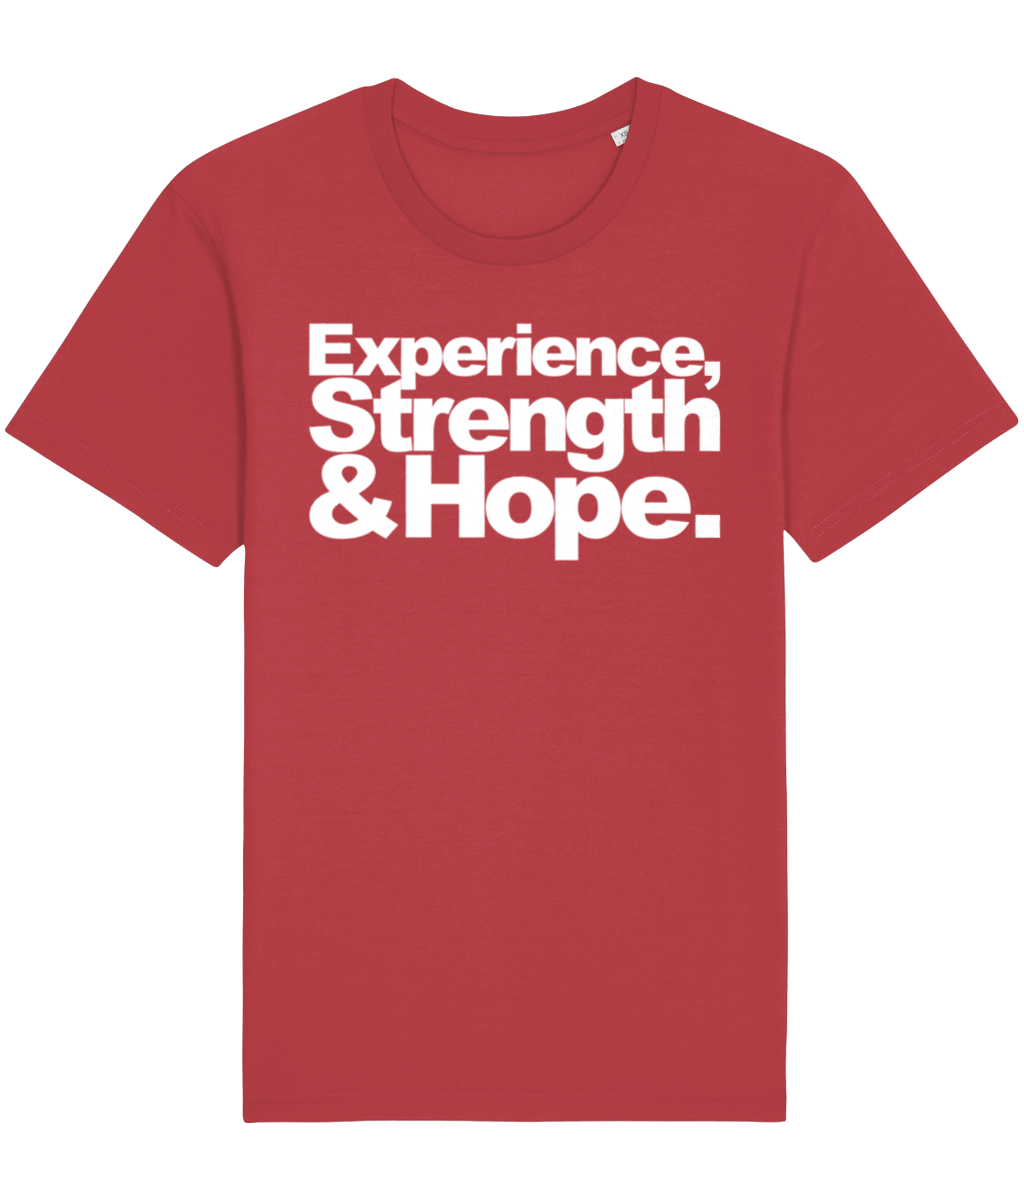 Experience, Strength & Hope Organic Cotton T-shirt